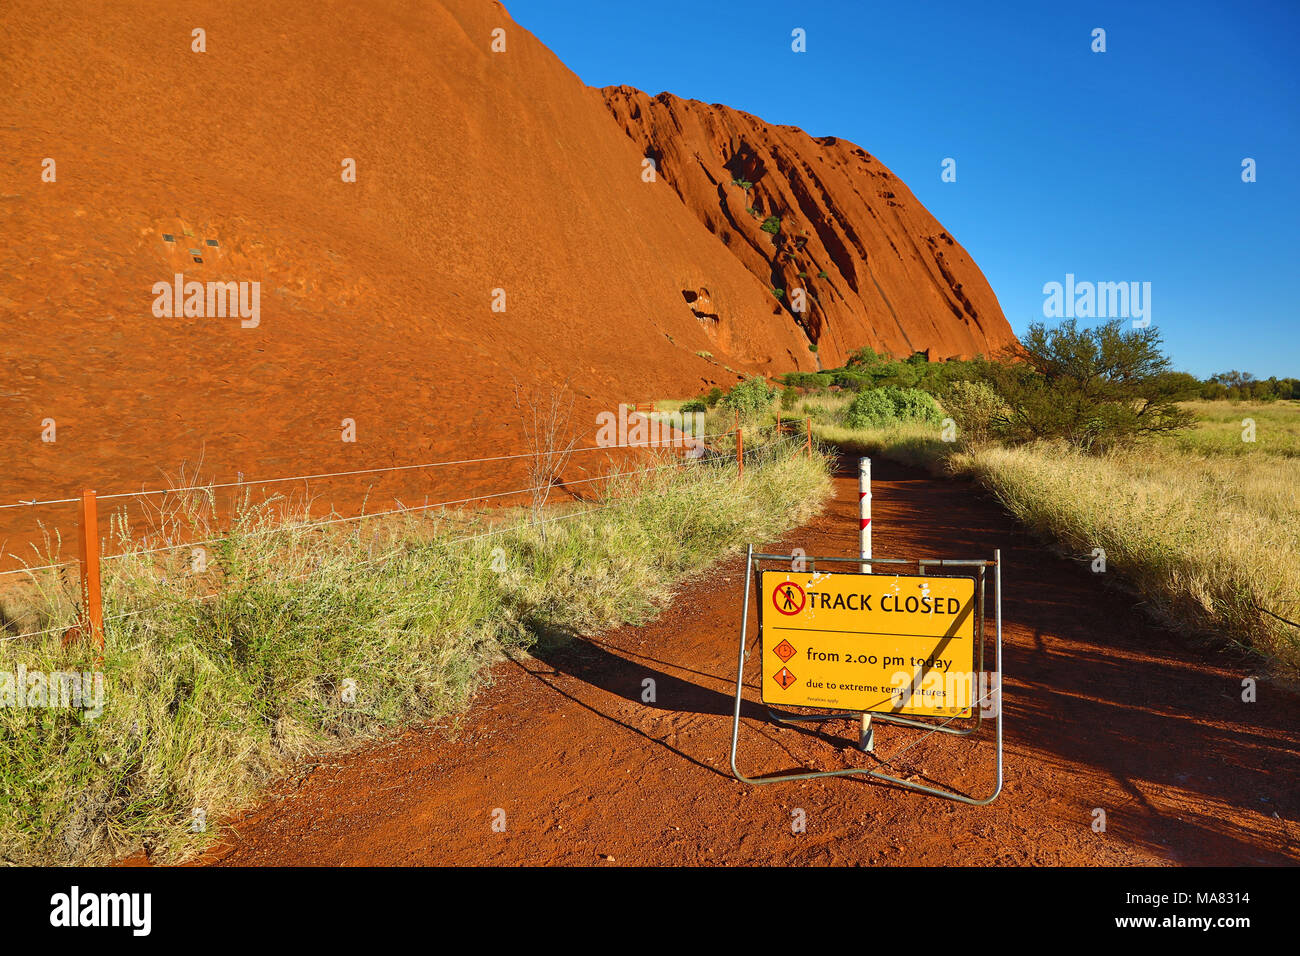 Closed path heat warning sign at Uluru, Ayers Rock, Uluru-Kata Tjuta National Park, Northern Territory, Australia Stock Photo